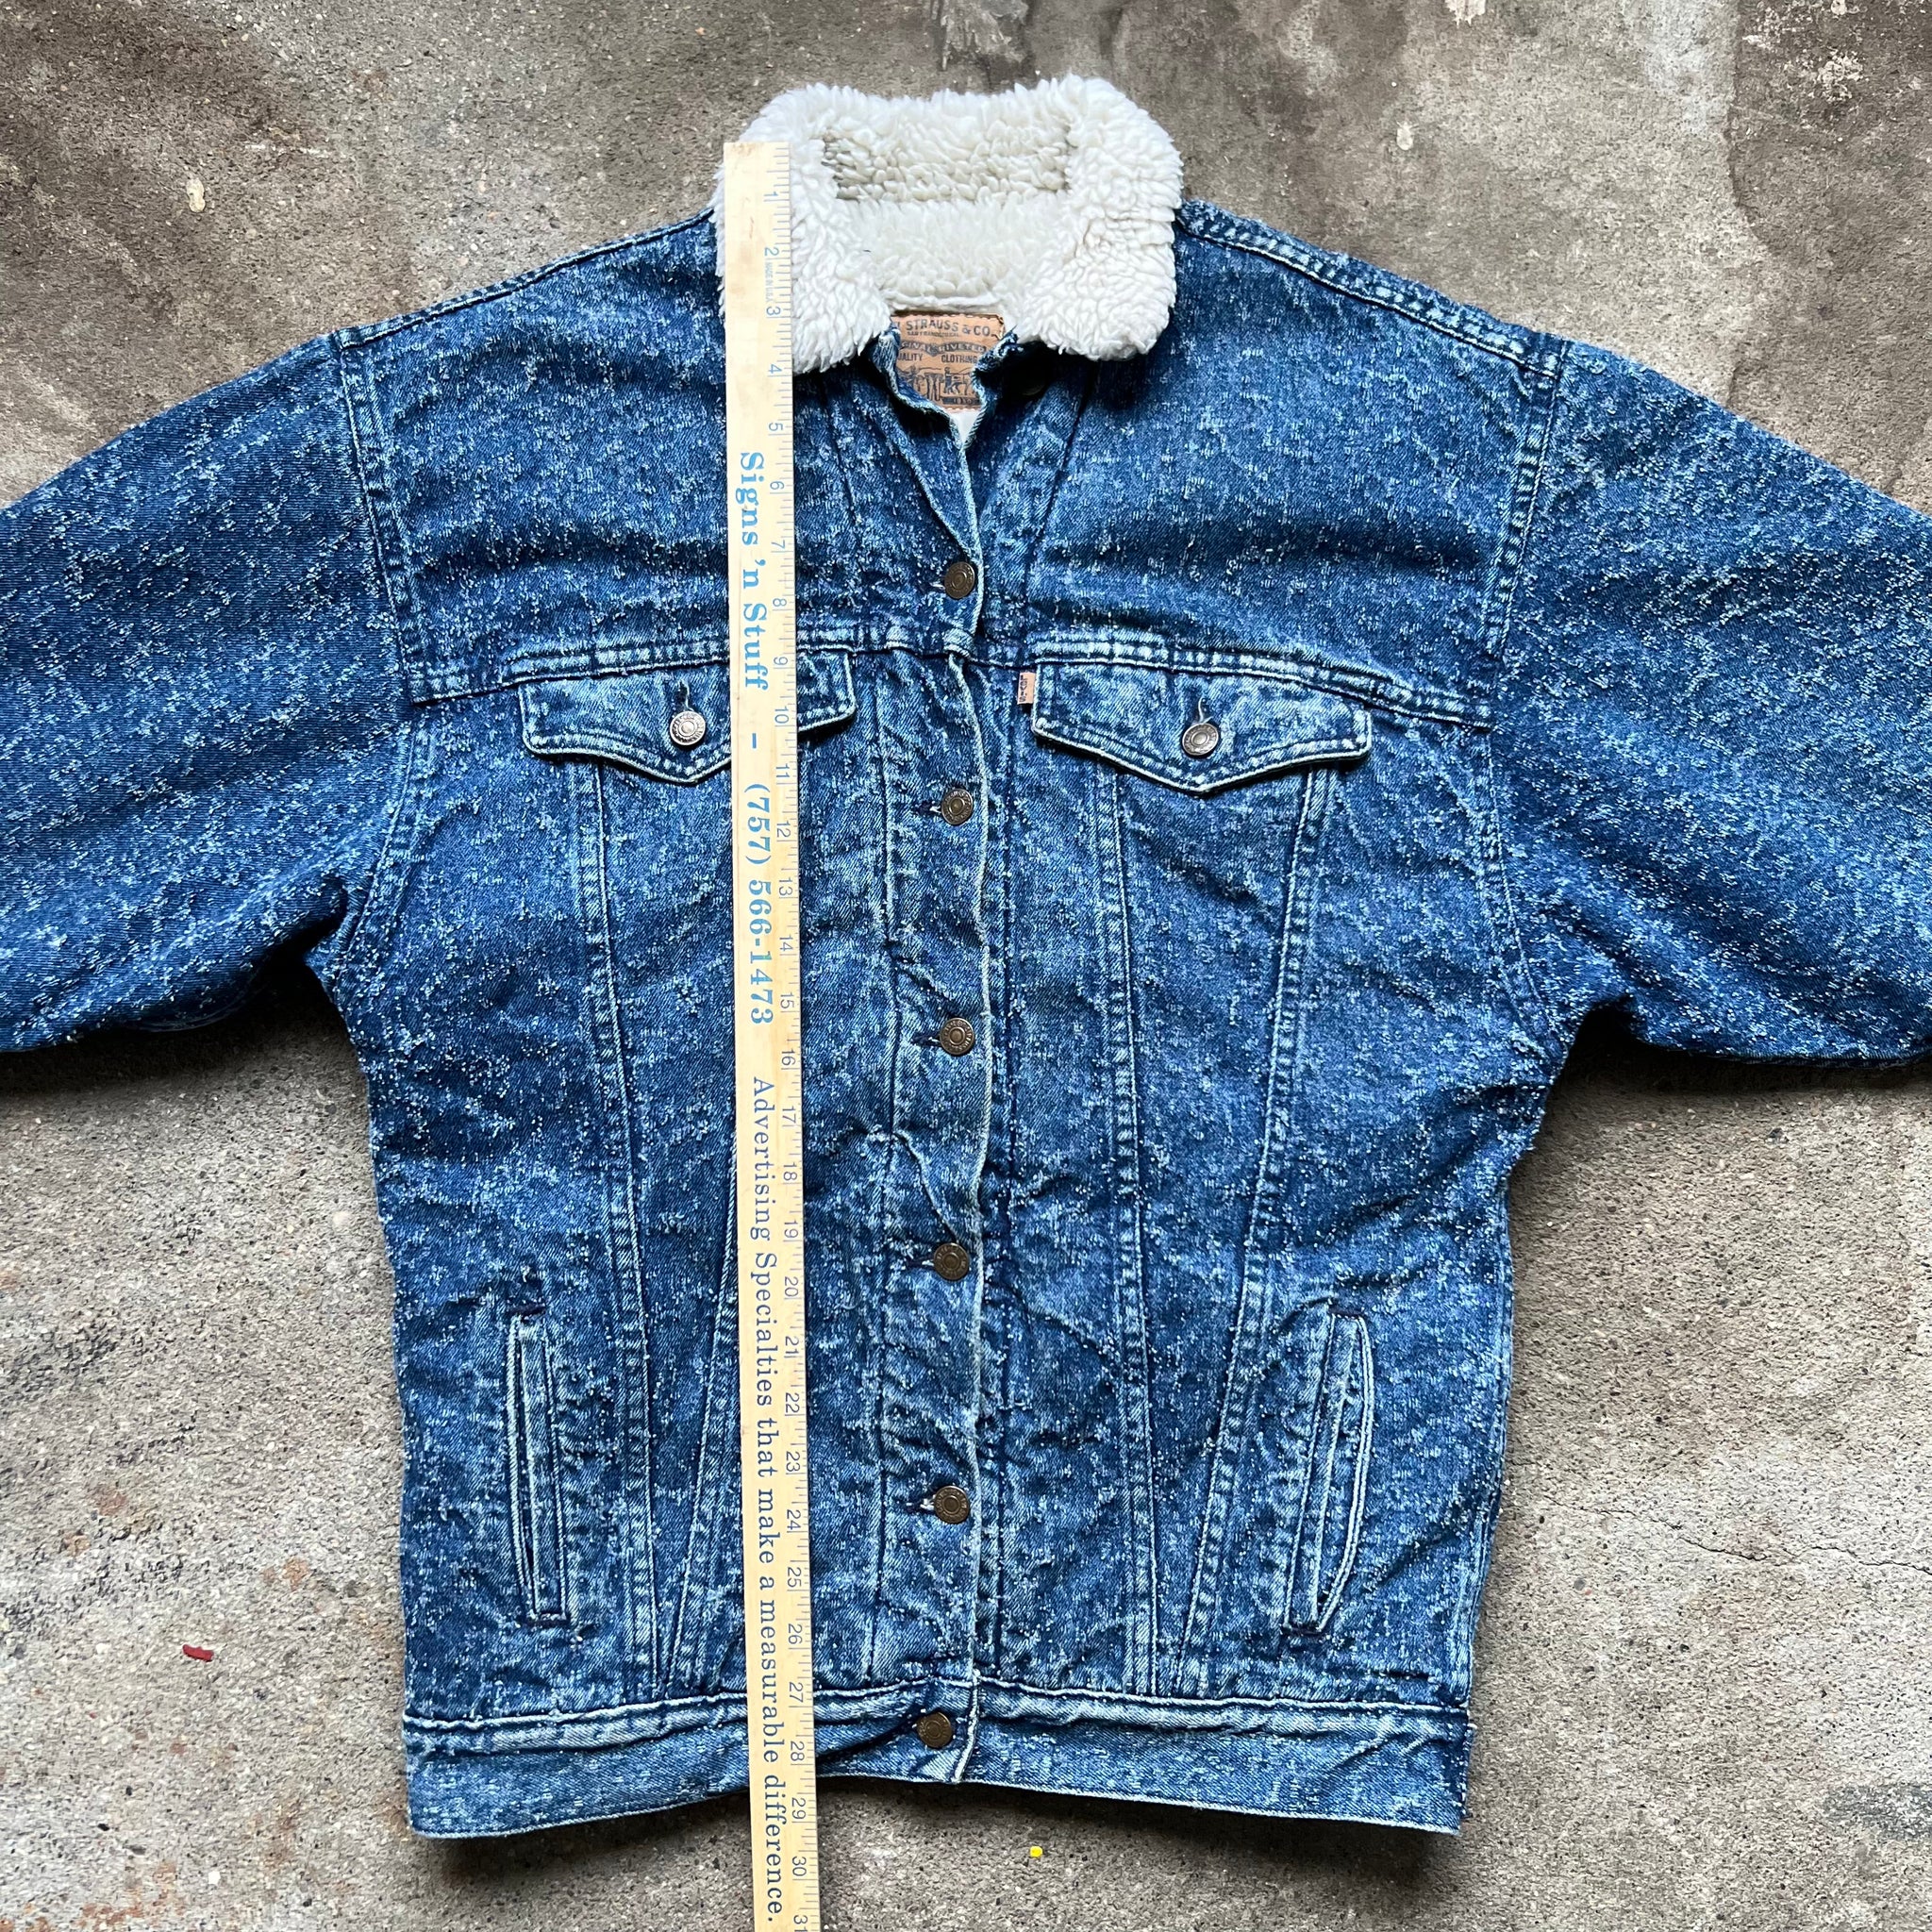 80s/90s Levi’s Sherpa Lined Denim Jacket Medium